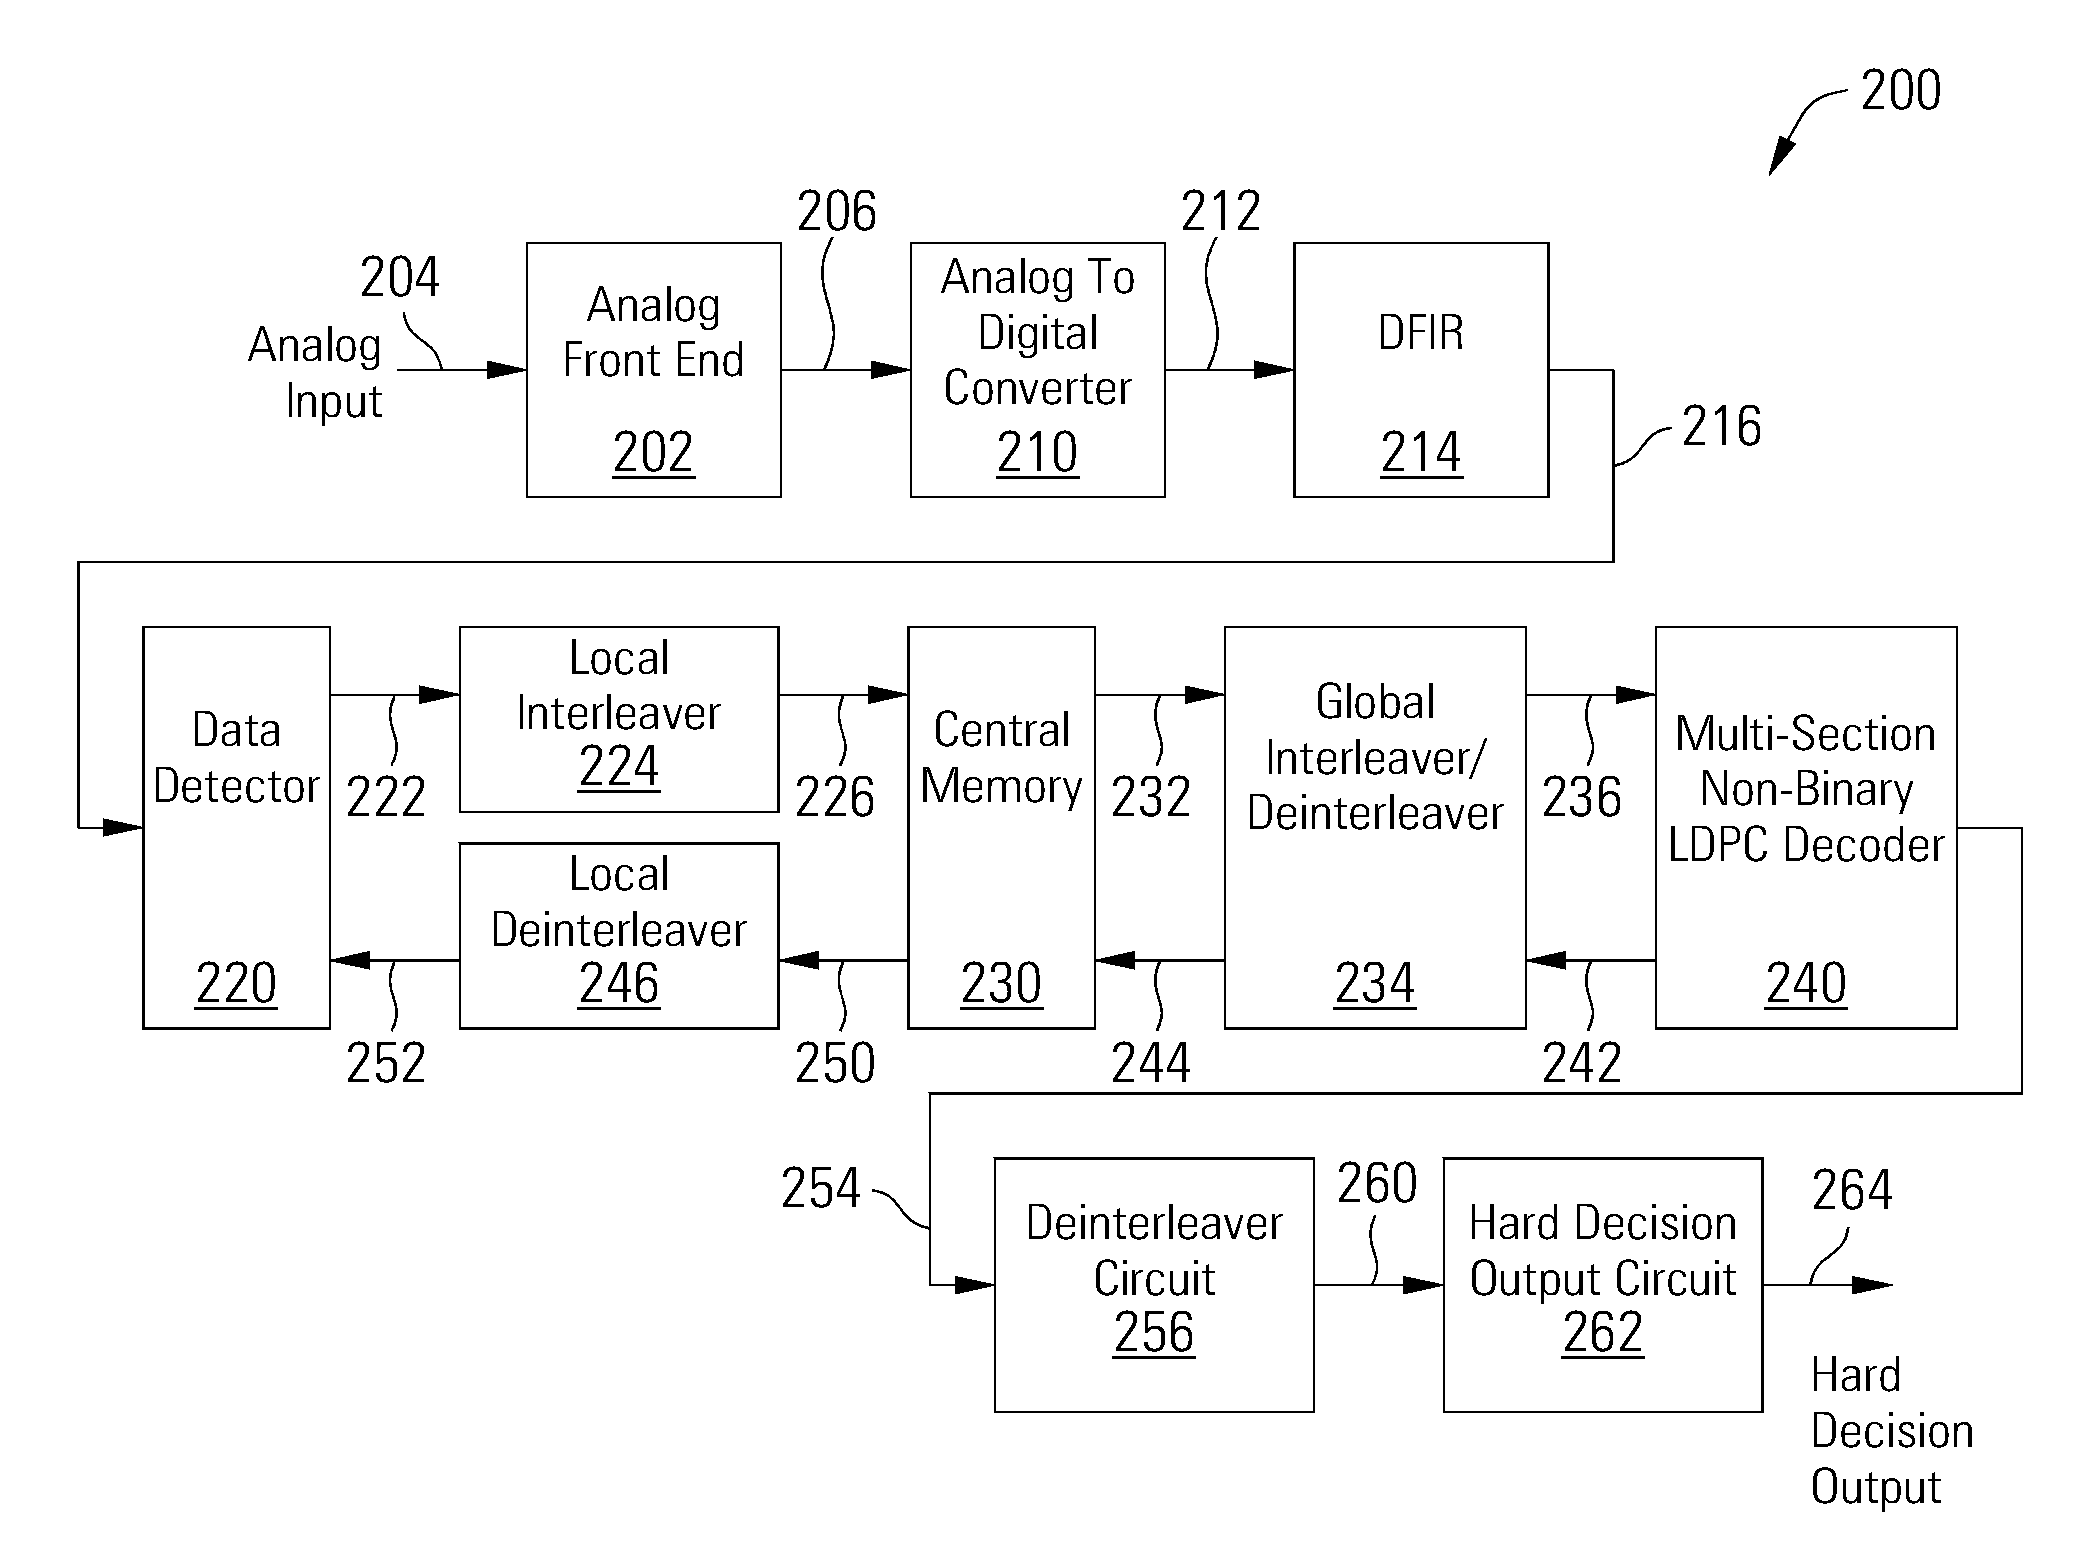 Multi-Section Non-Binary LDPC Decoder